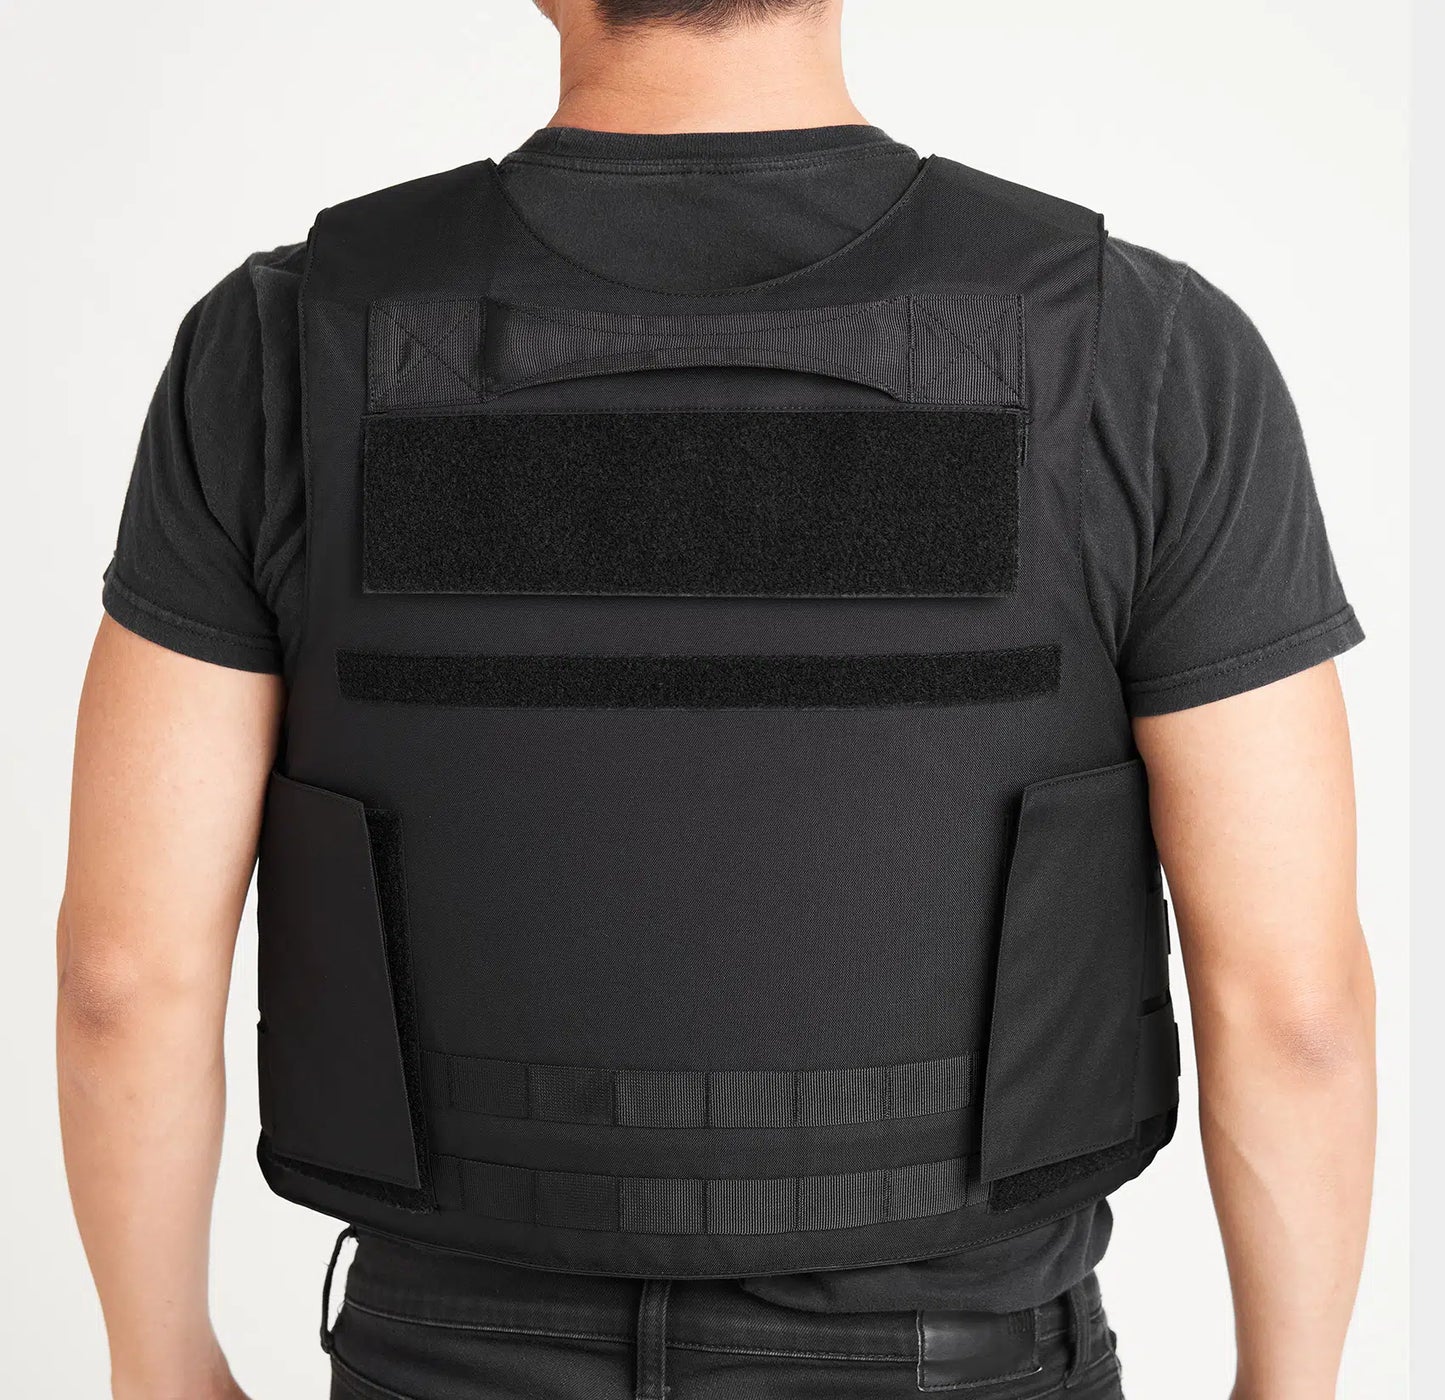 Ace Link Armor Patrol Bulletproof Vest Level IIIA Anti-Stab